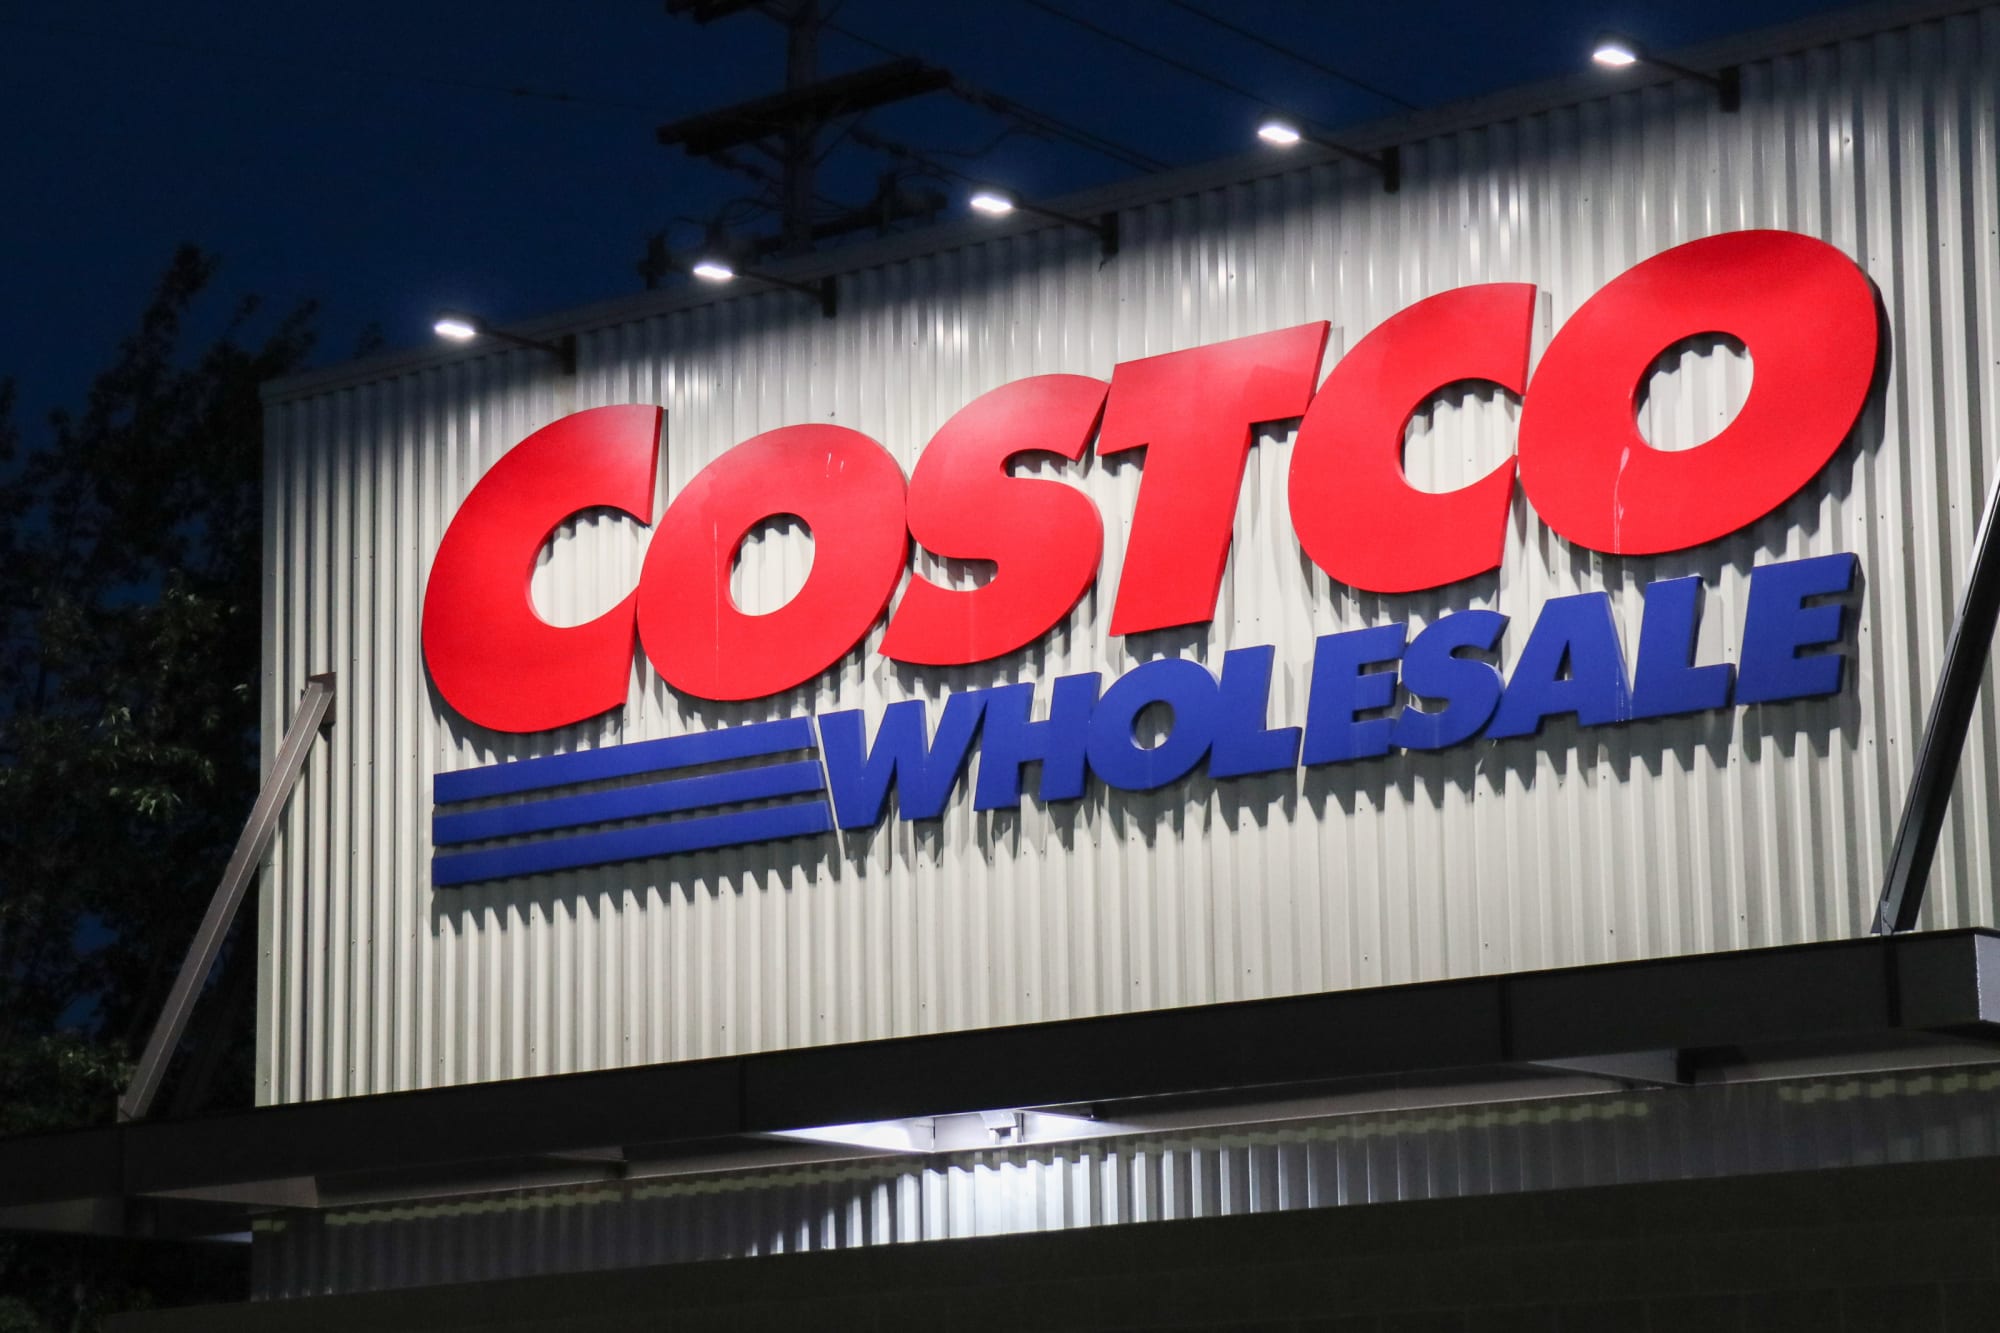 Is Costco open on Labor Day? Costco Labor Day 2021 hours